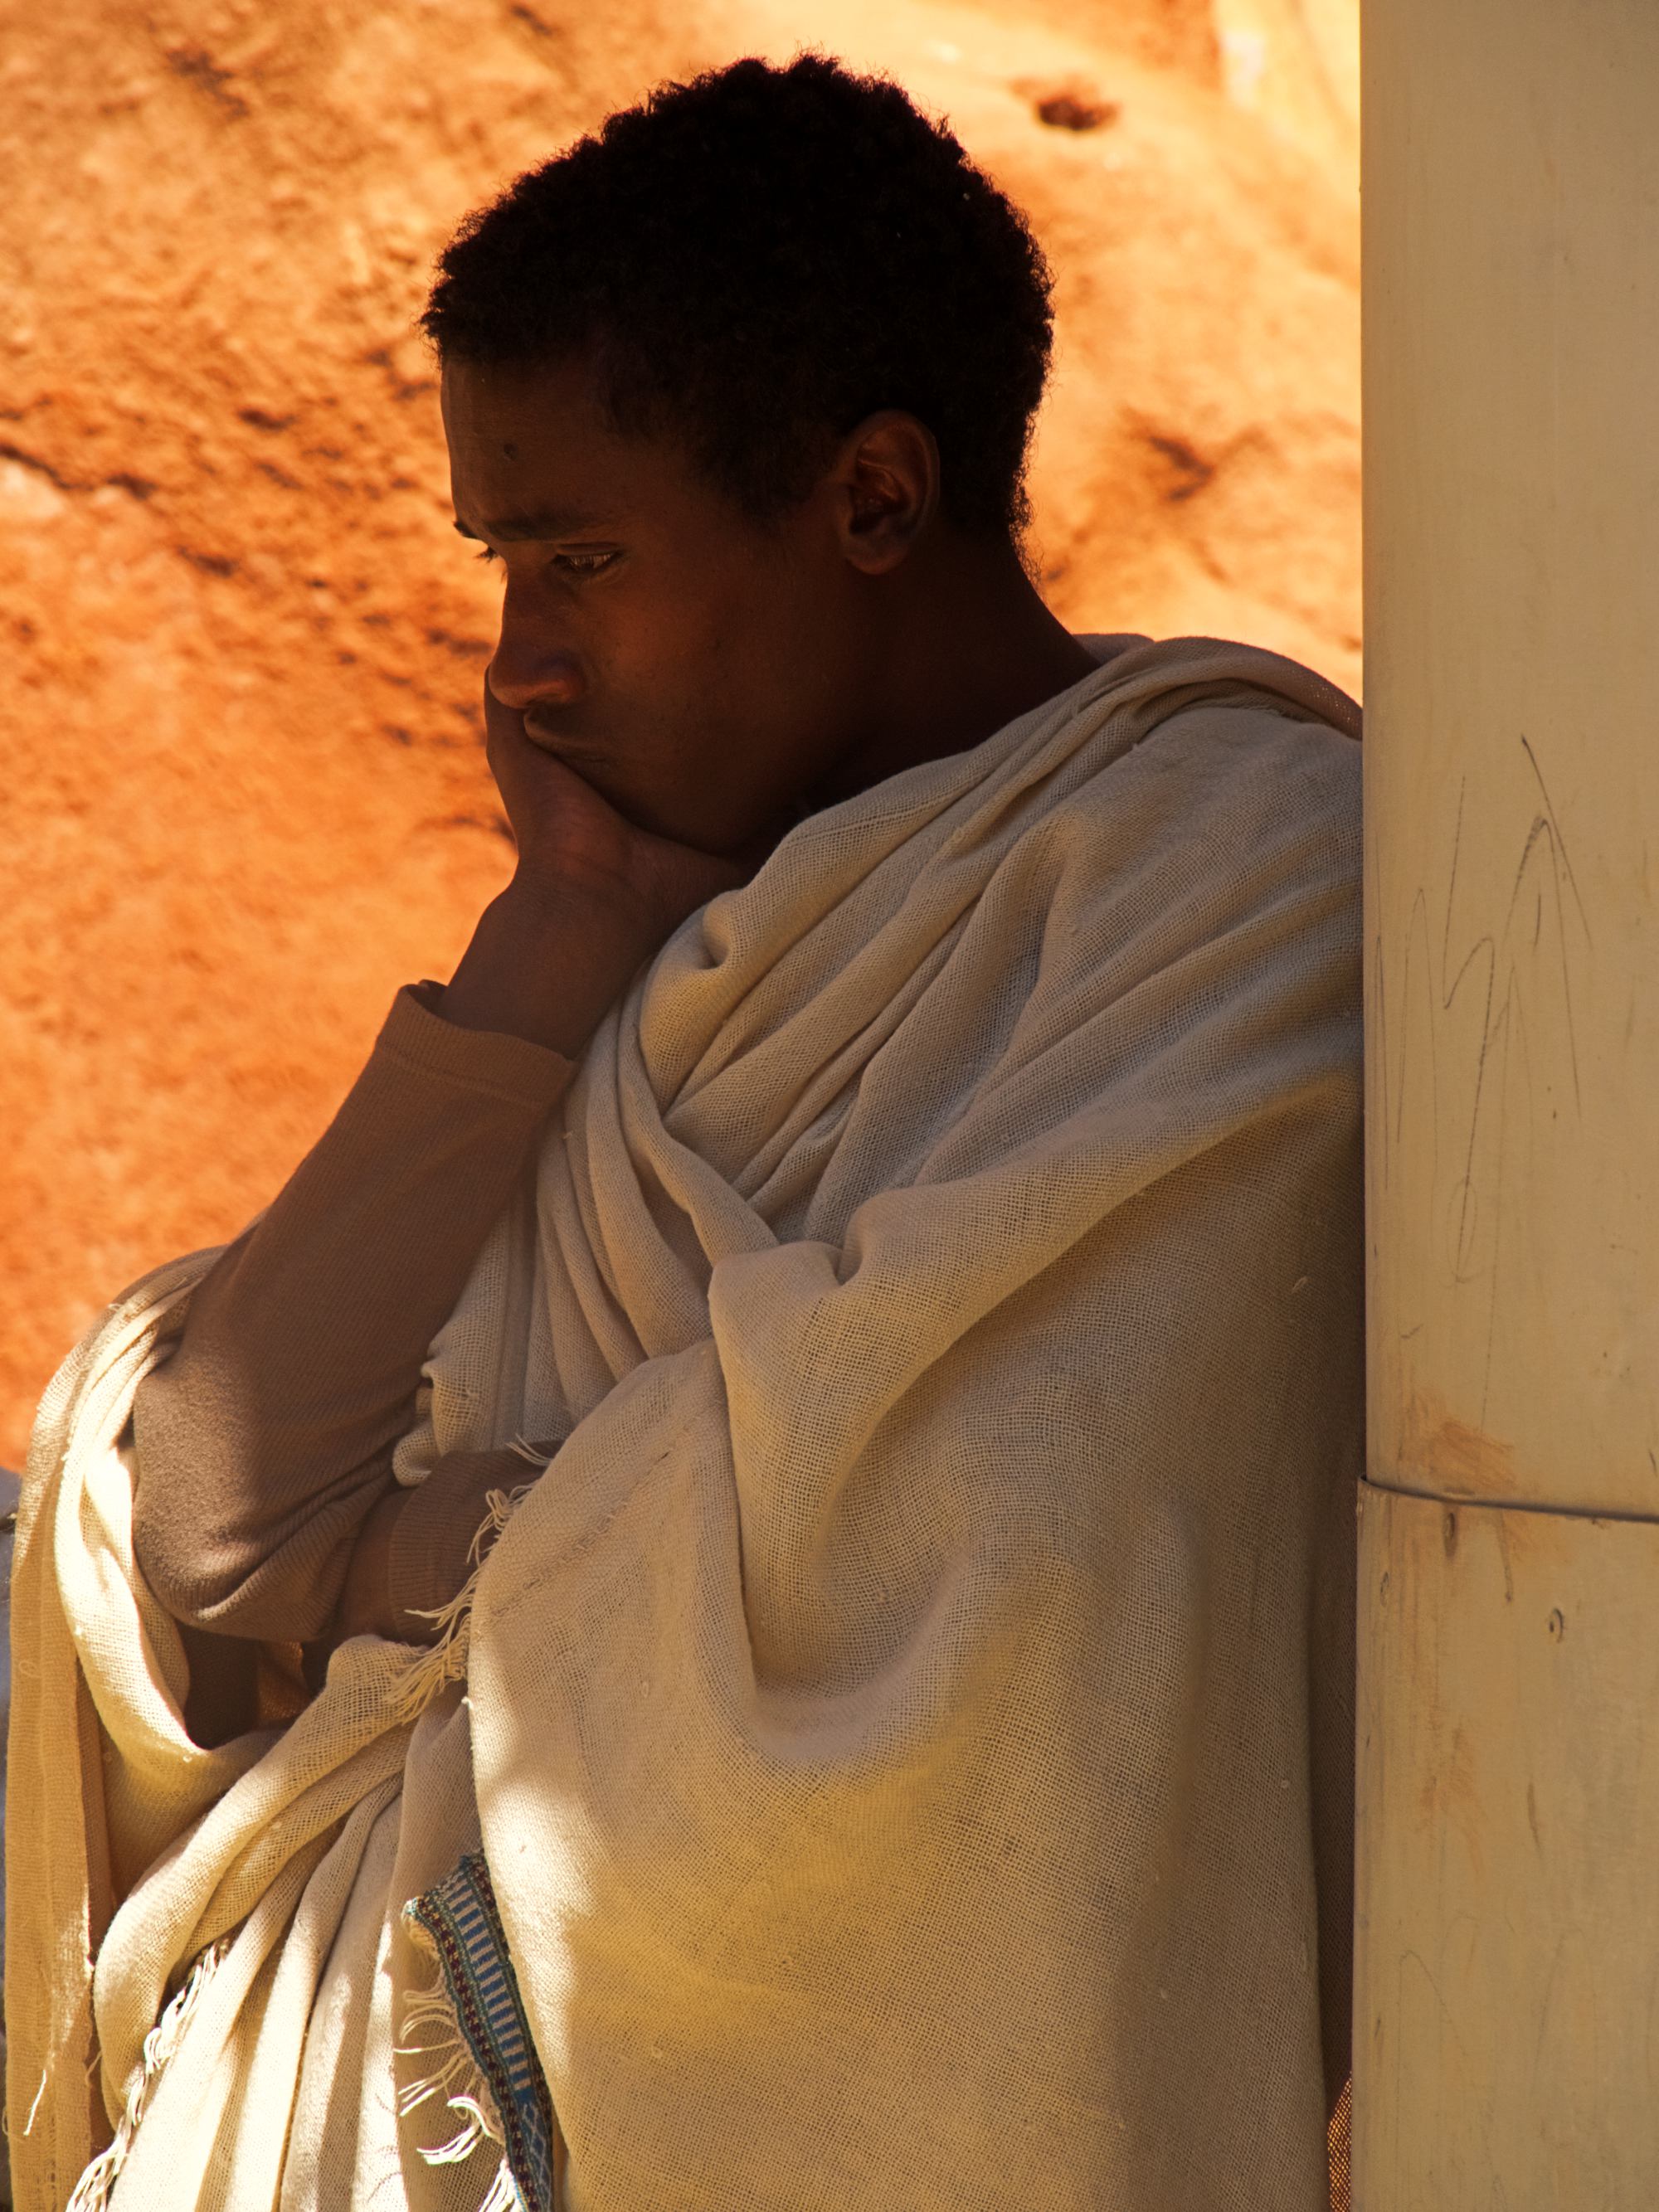 Etiopía, un inesperado descubrimiento de ocho días, Addis Abeba